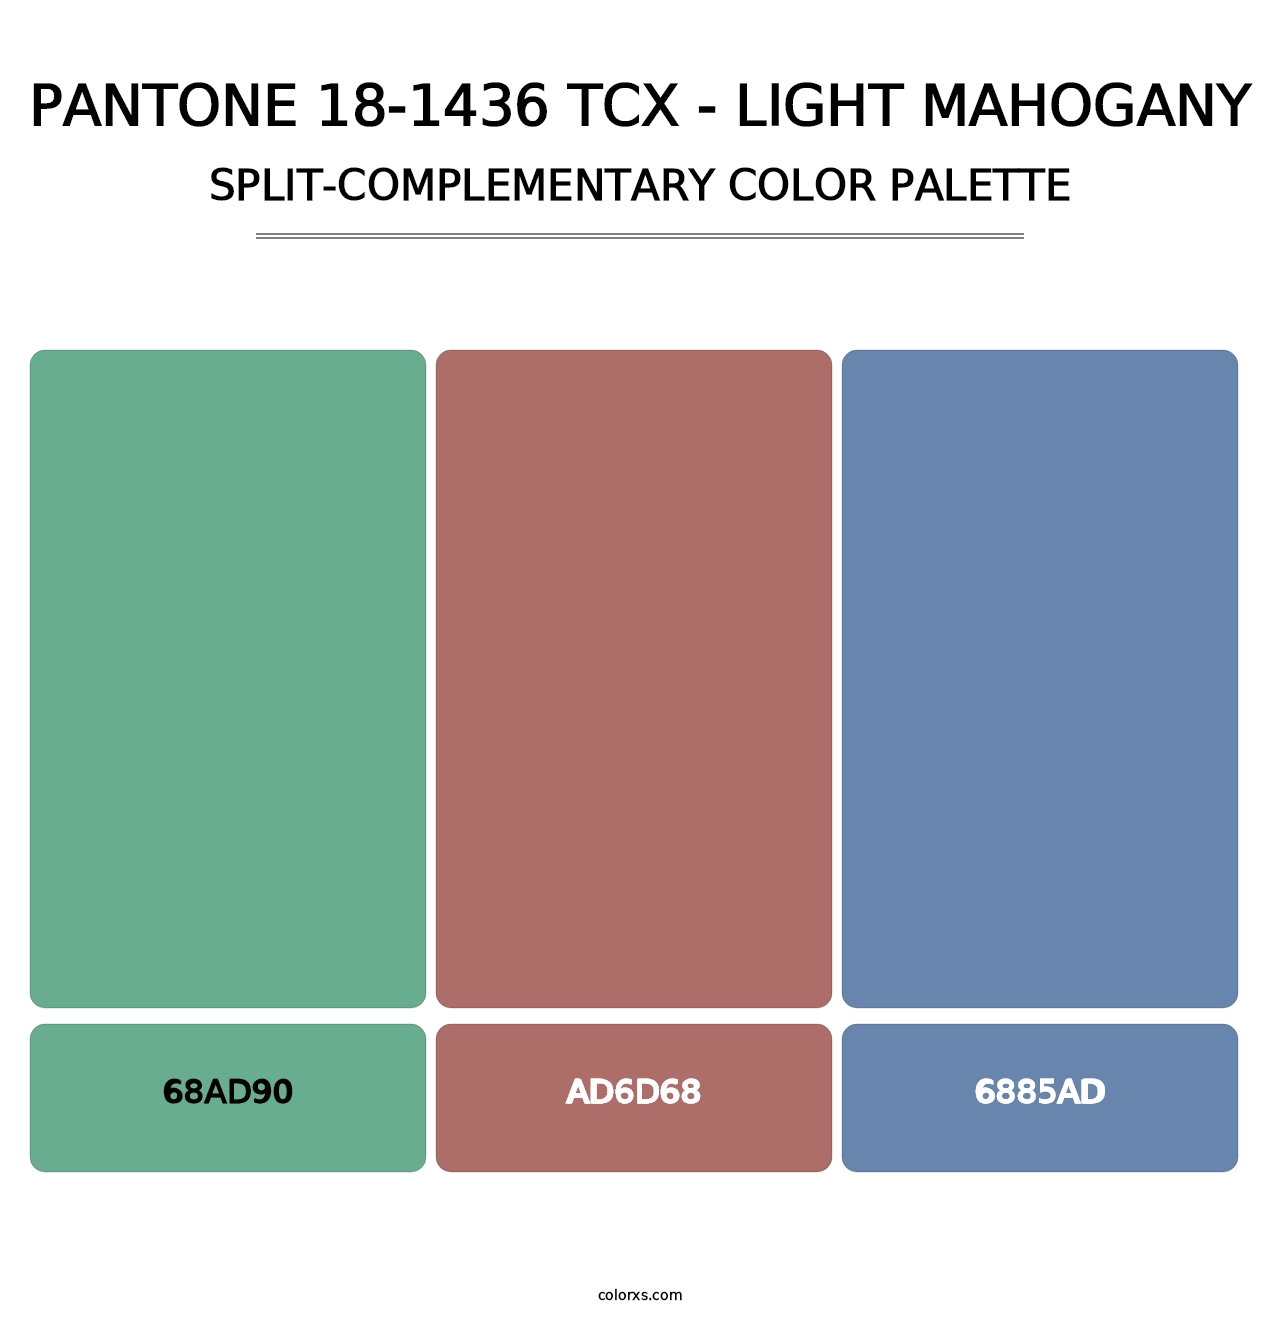 PANTONE 18-1436 TCX - Light Mahogany - Split-Complementary Color Palette